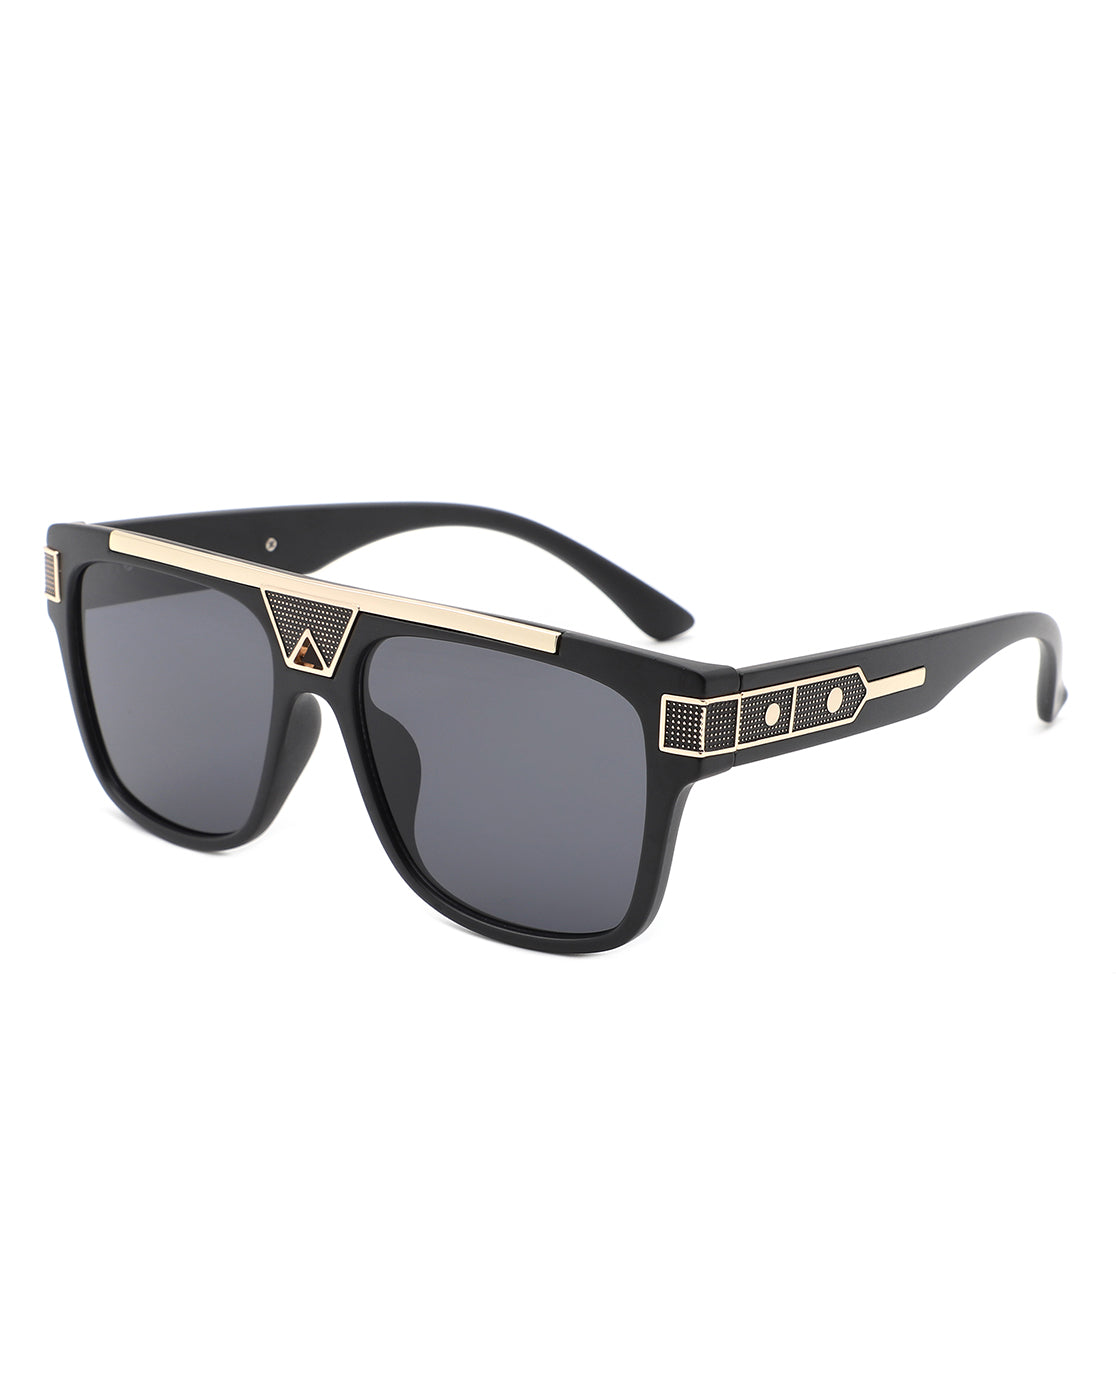 Cramilo Retro Aviator Sunglasses - Square Frame Women's Fashion Sun Glasses - UVA & UVB Protection Polycarbonate Lens Eyewear